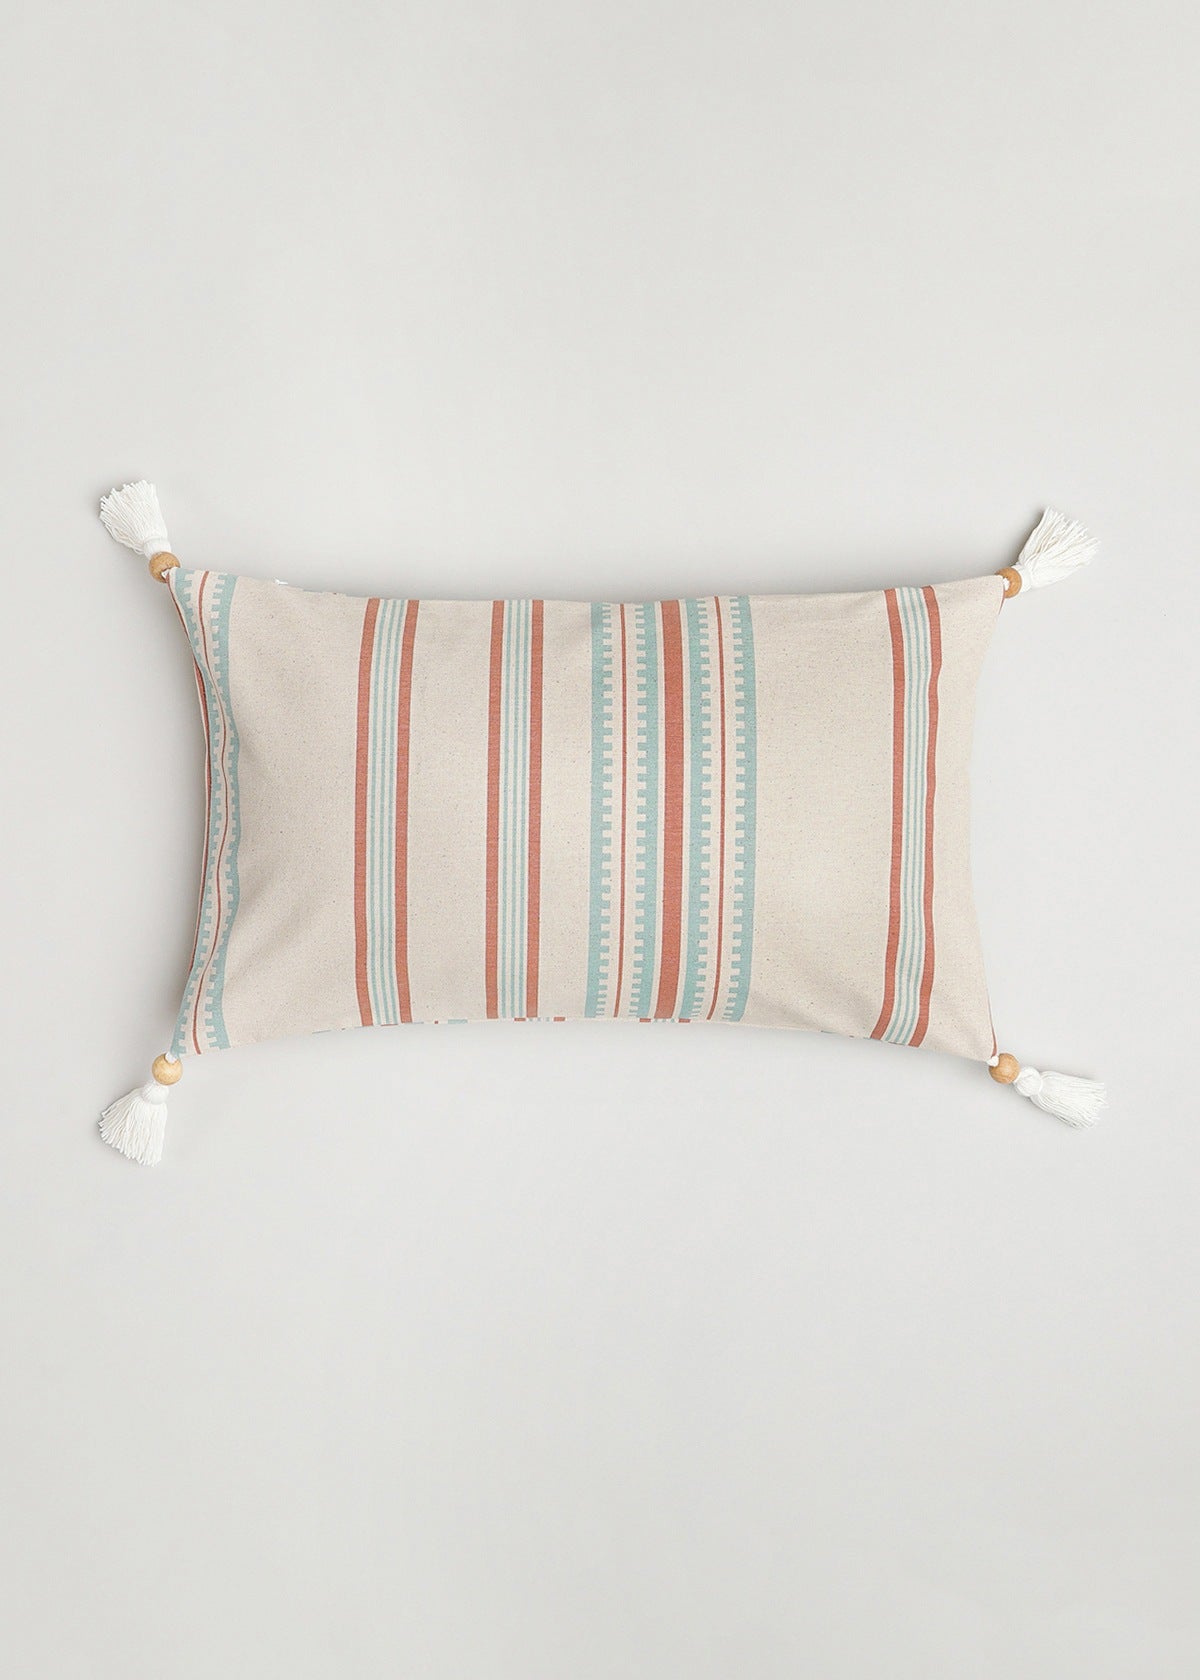 Roman Stripe Lumbar, Linen Solid 16" , Dahlia Rust 16" Set Of 3 Combo Cotton Cushion Cover - Rust And Beige